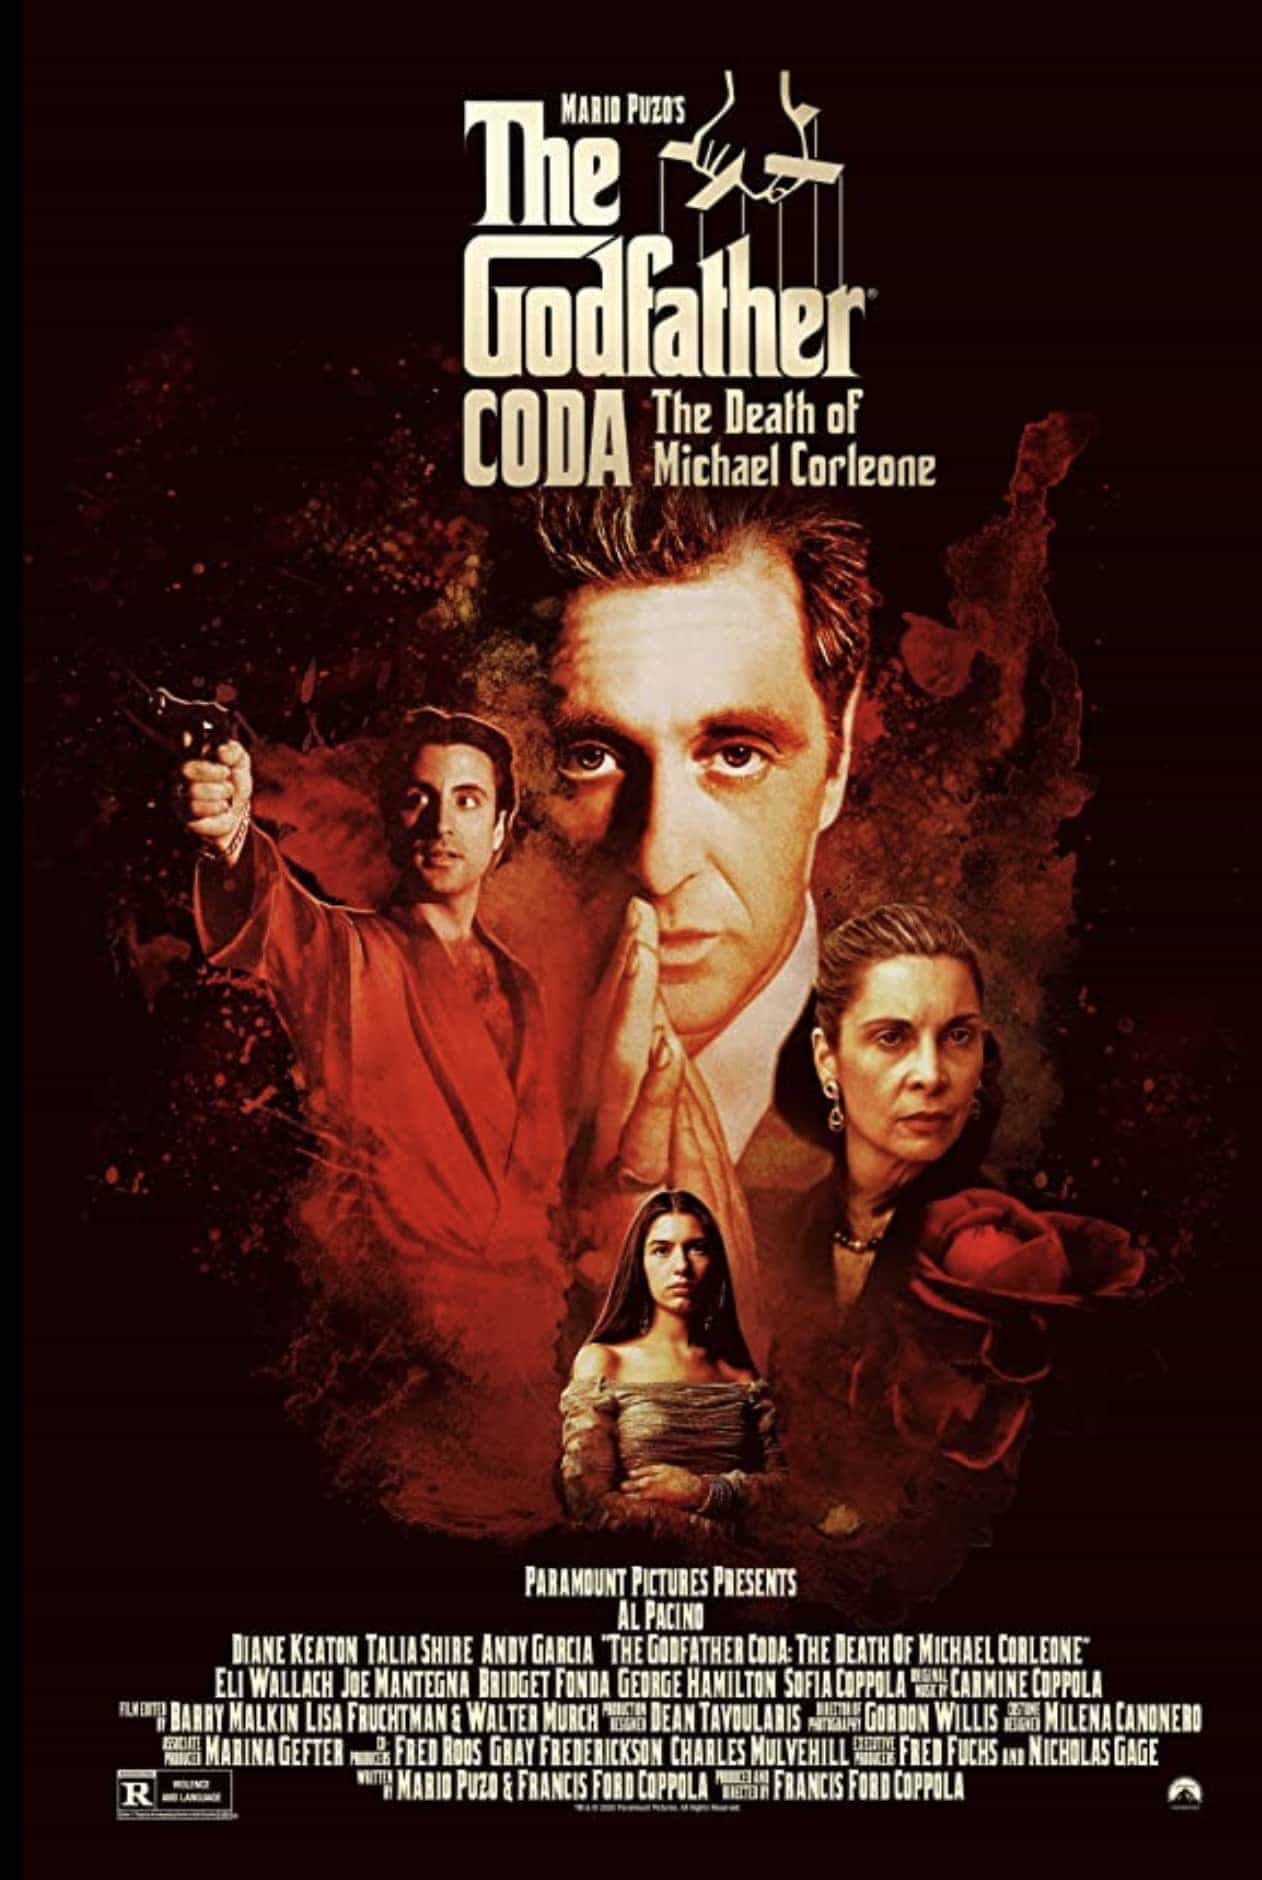 The Godfather Coda the Death of Michael Corleone